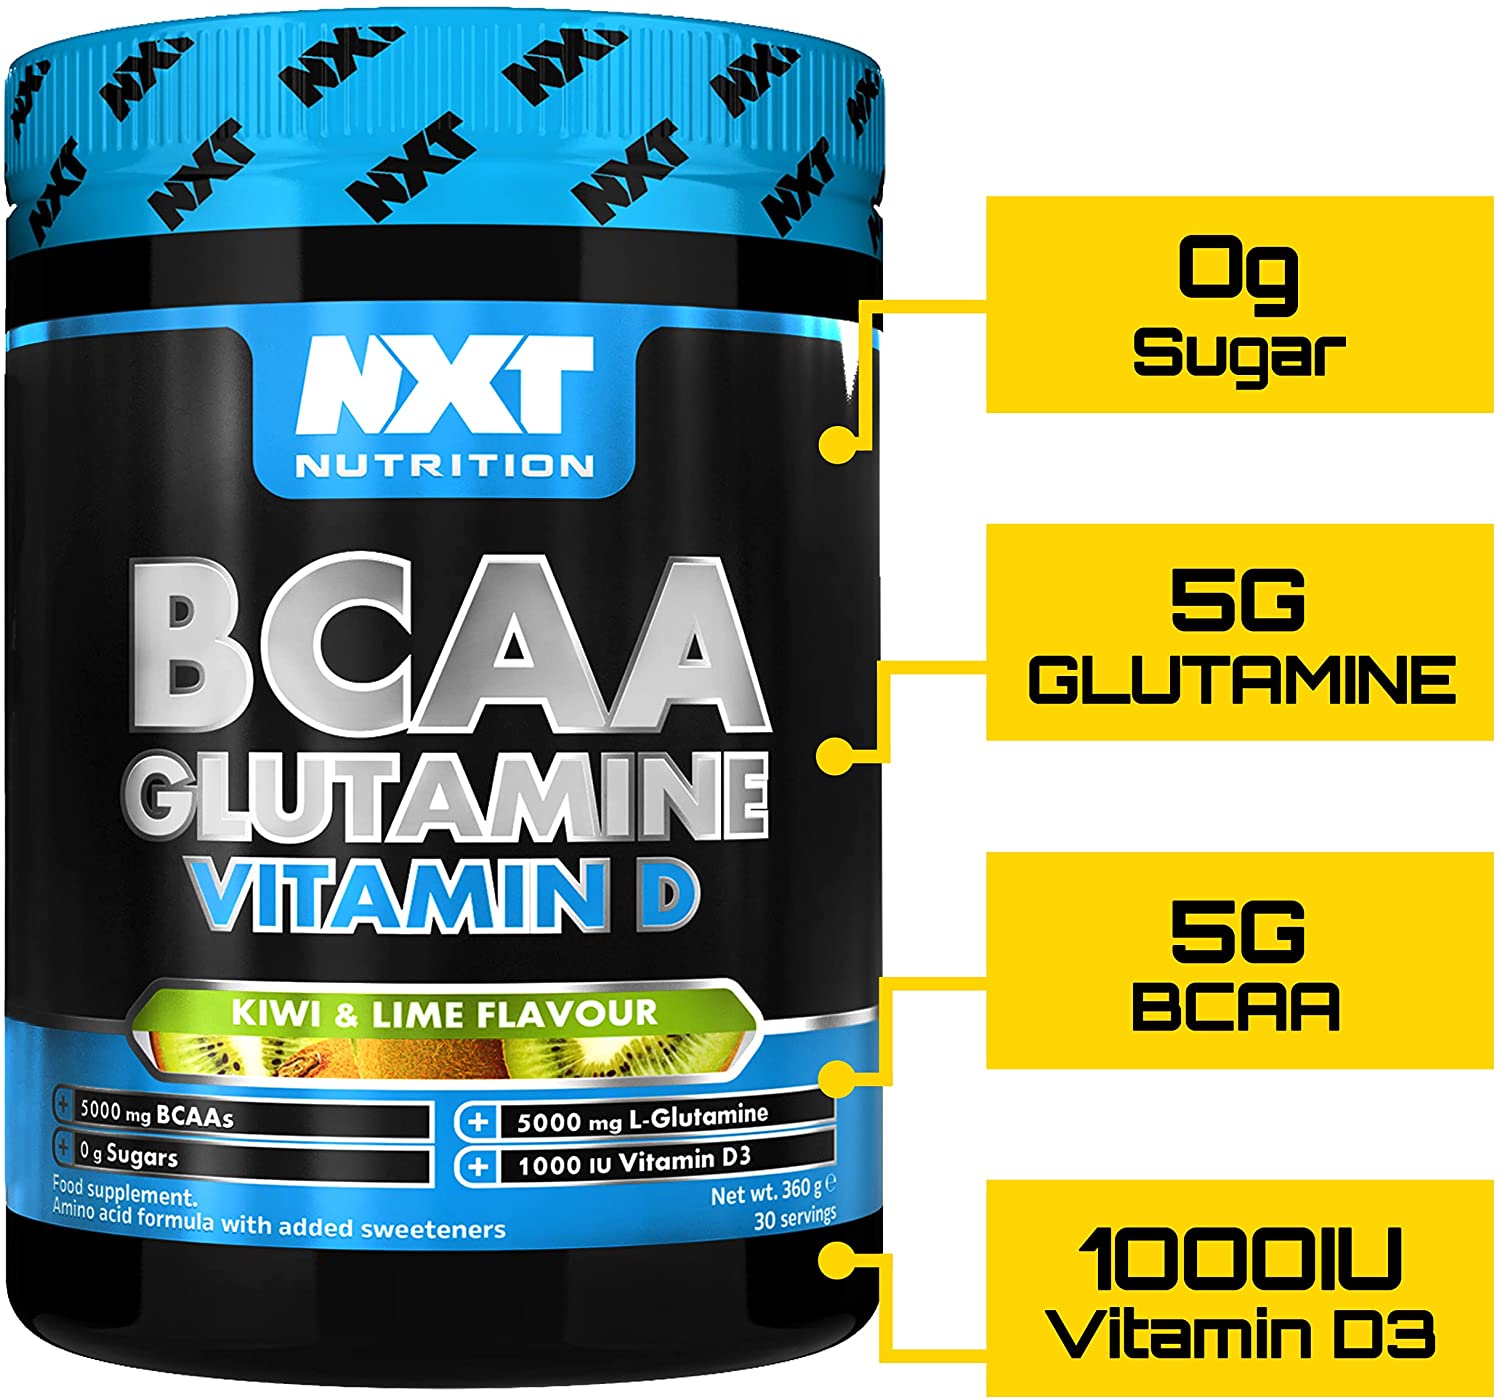 NXT Nutrition BCAA Glutamine Vitamin D